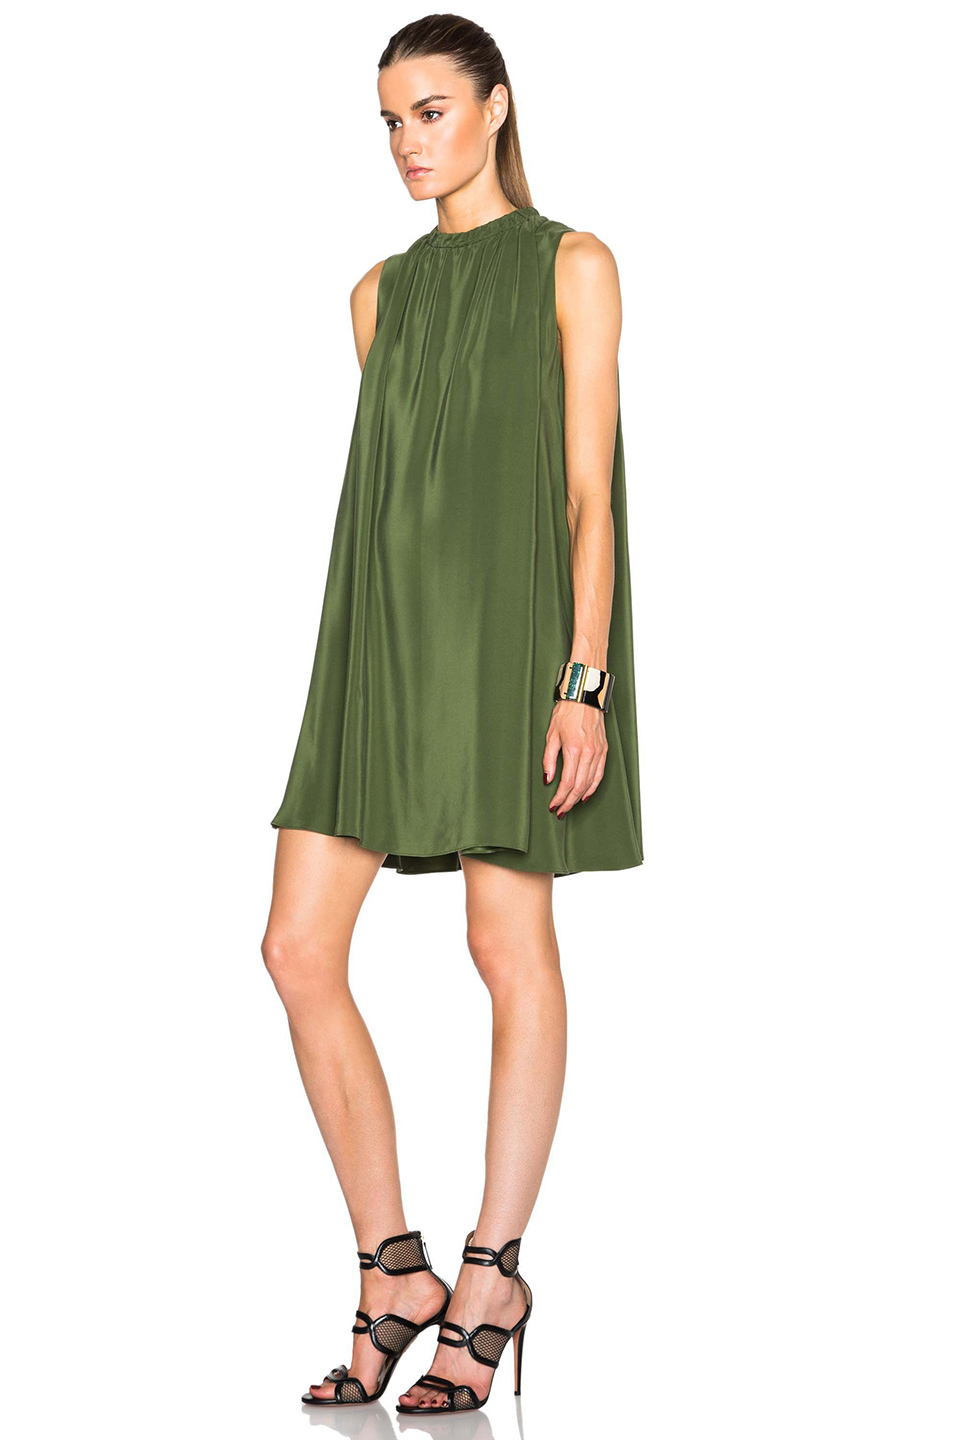 camilla and marc green dress